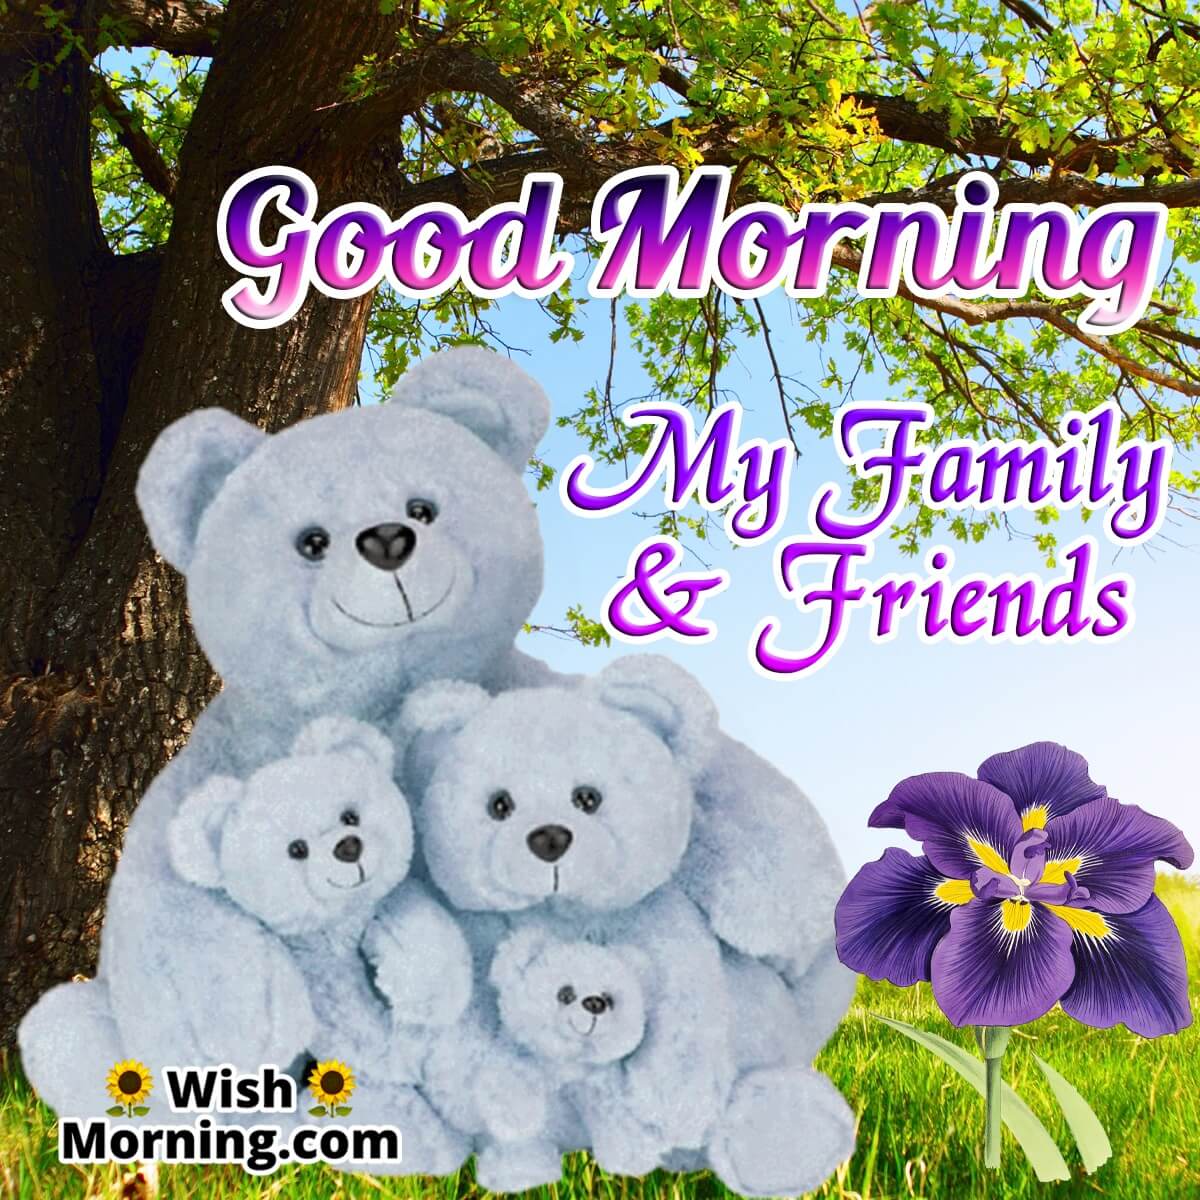 Good Morning Teddy Bear Family